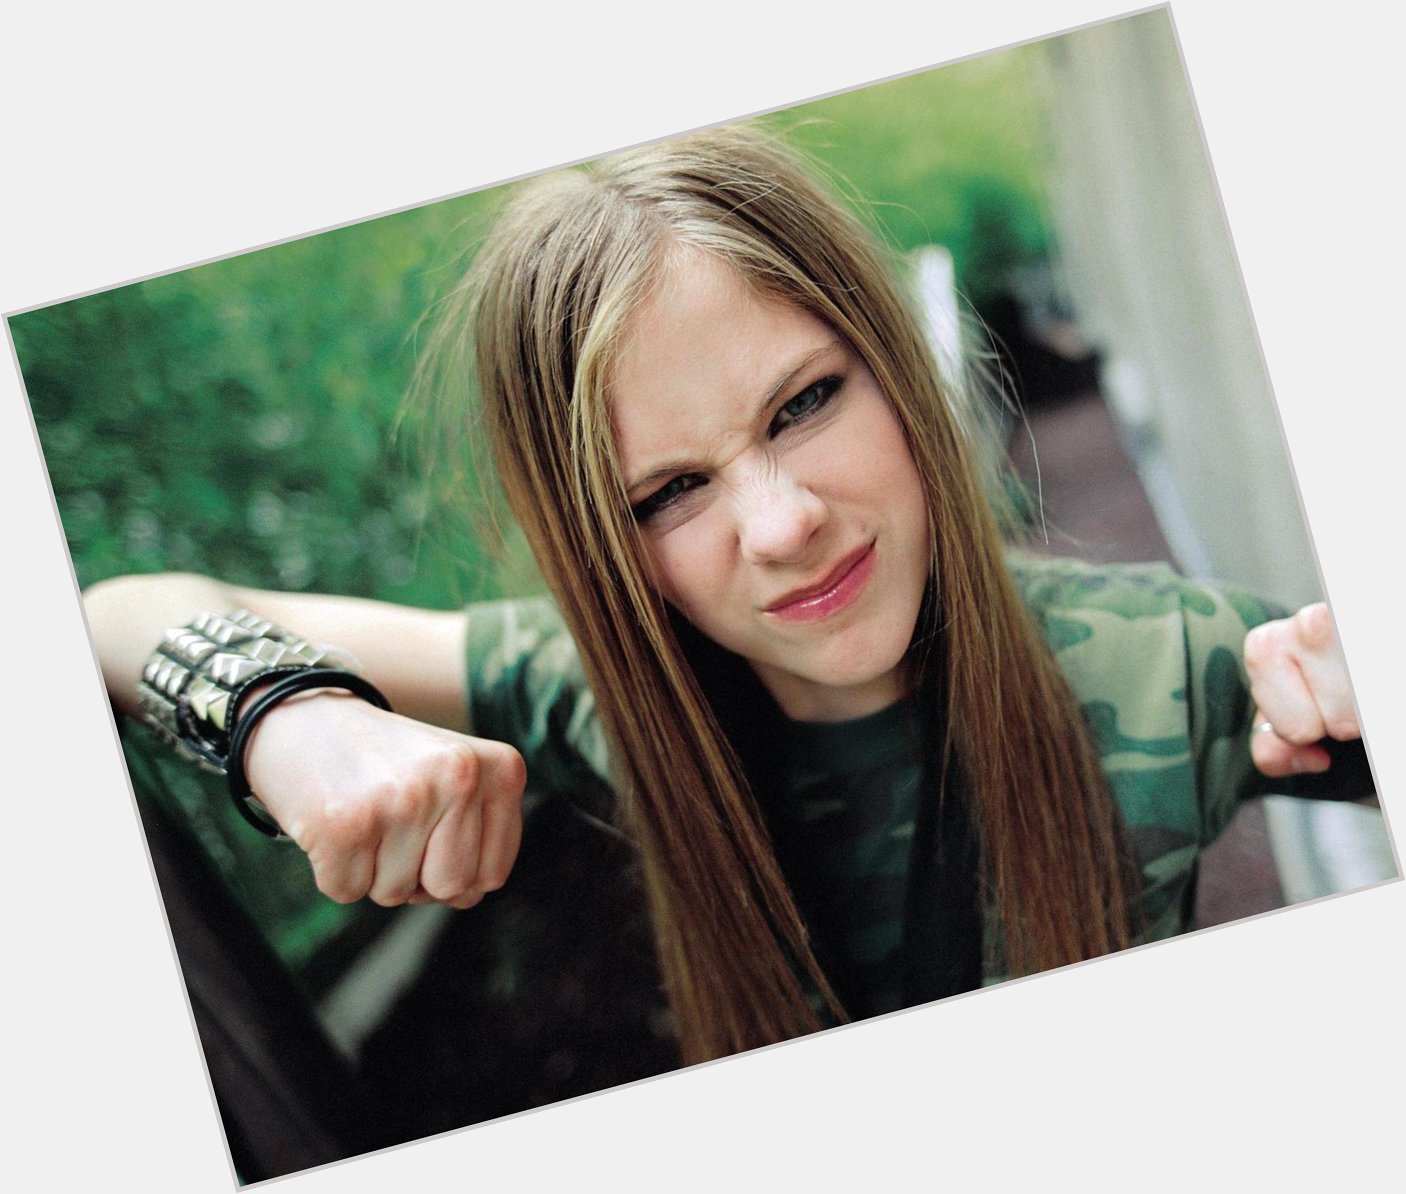 Happy Birthday Avril Lavigne. See more celebrity birthdays Sept. 27-Oct. 3  